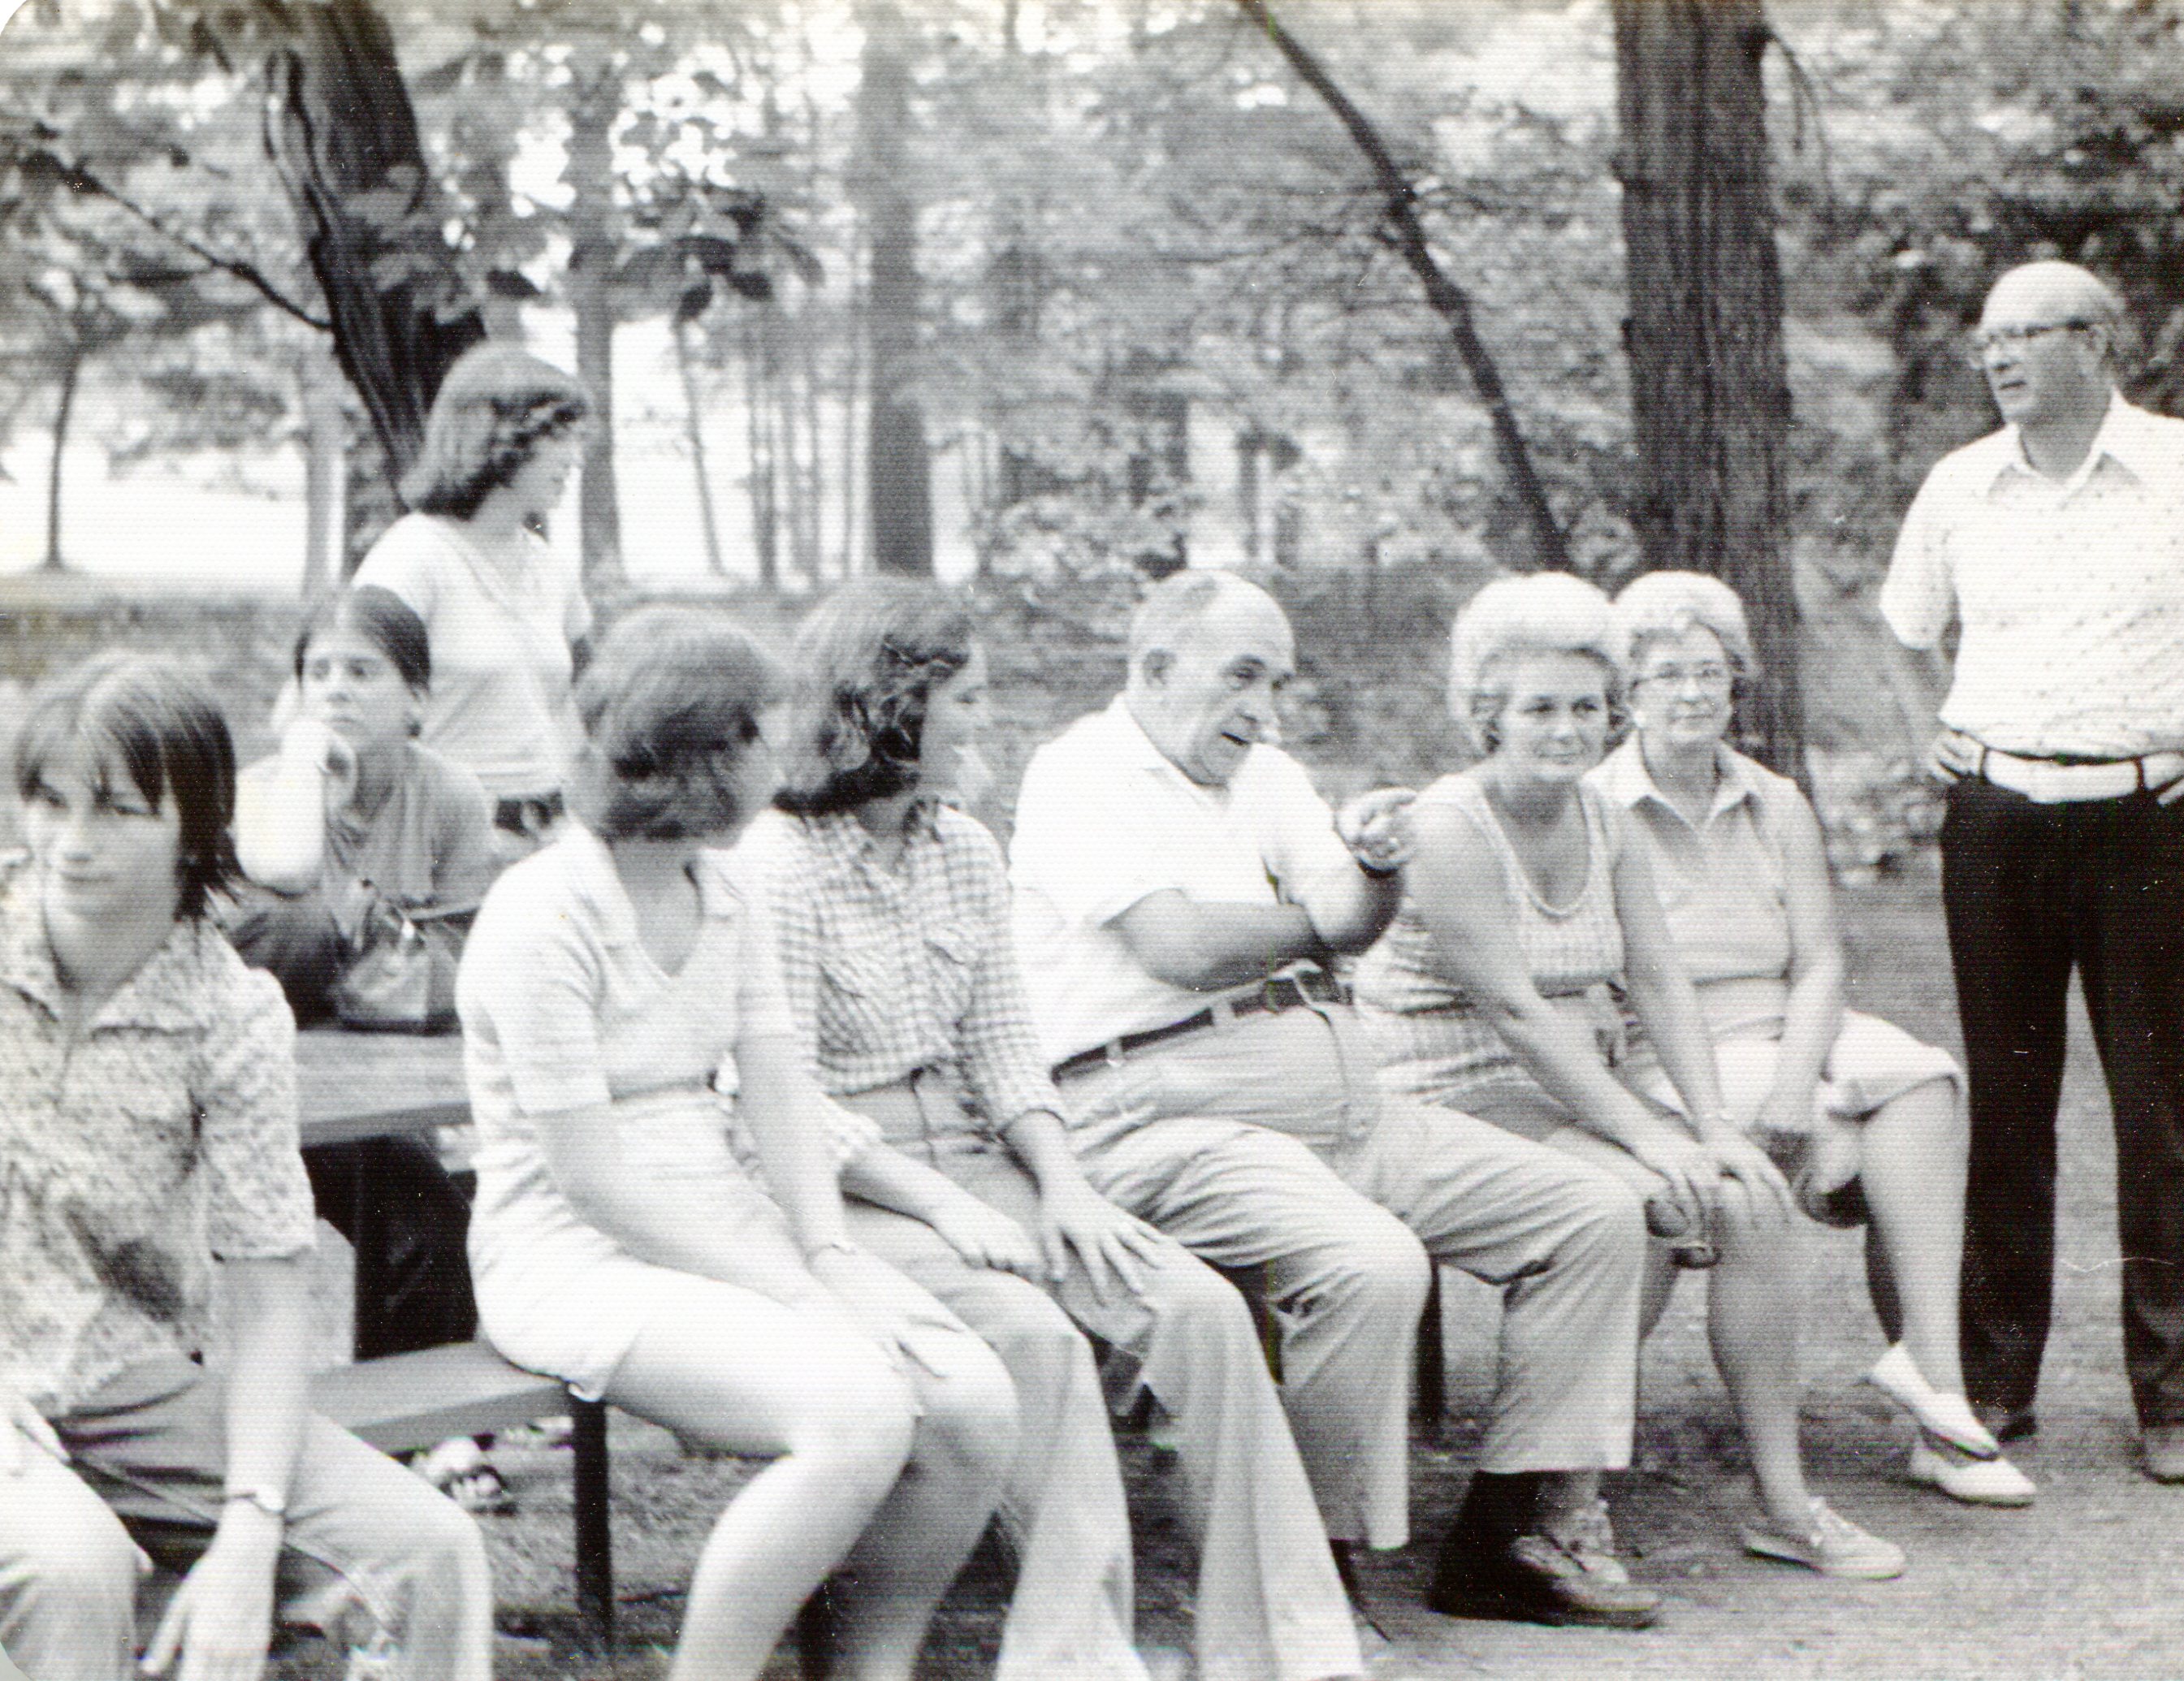 crowd around picnic table